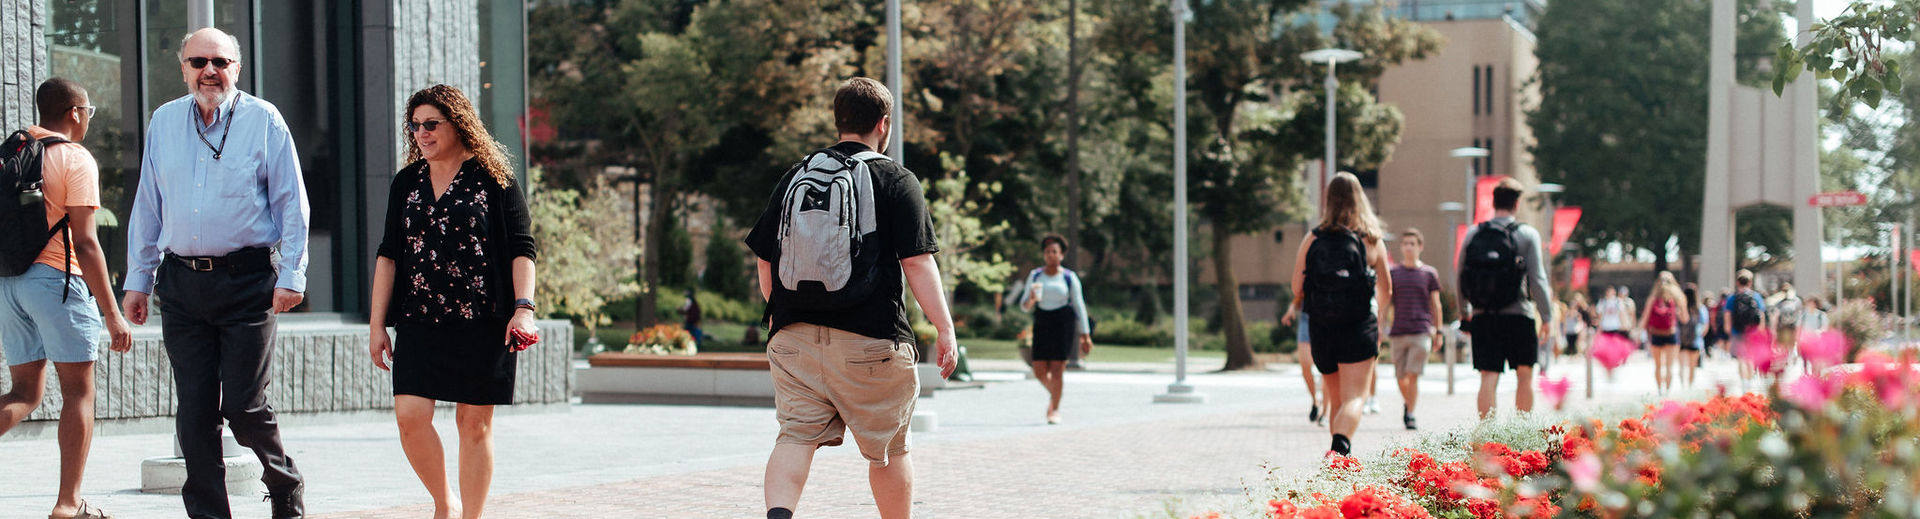 Temple students walk across Polett Walk between classes on Main Campus.